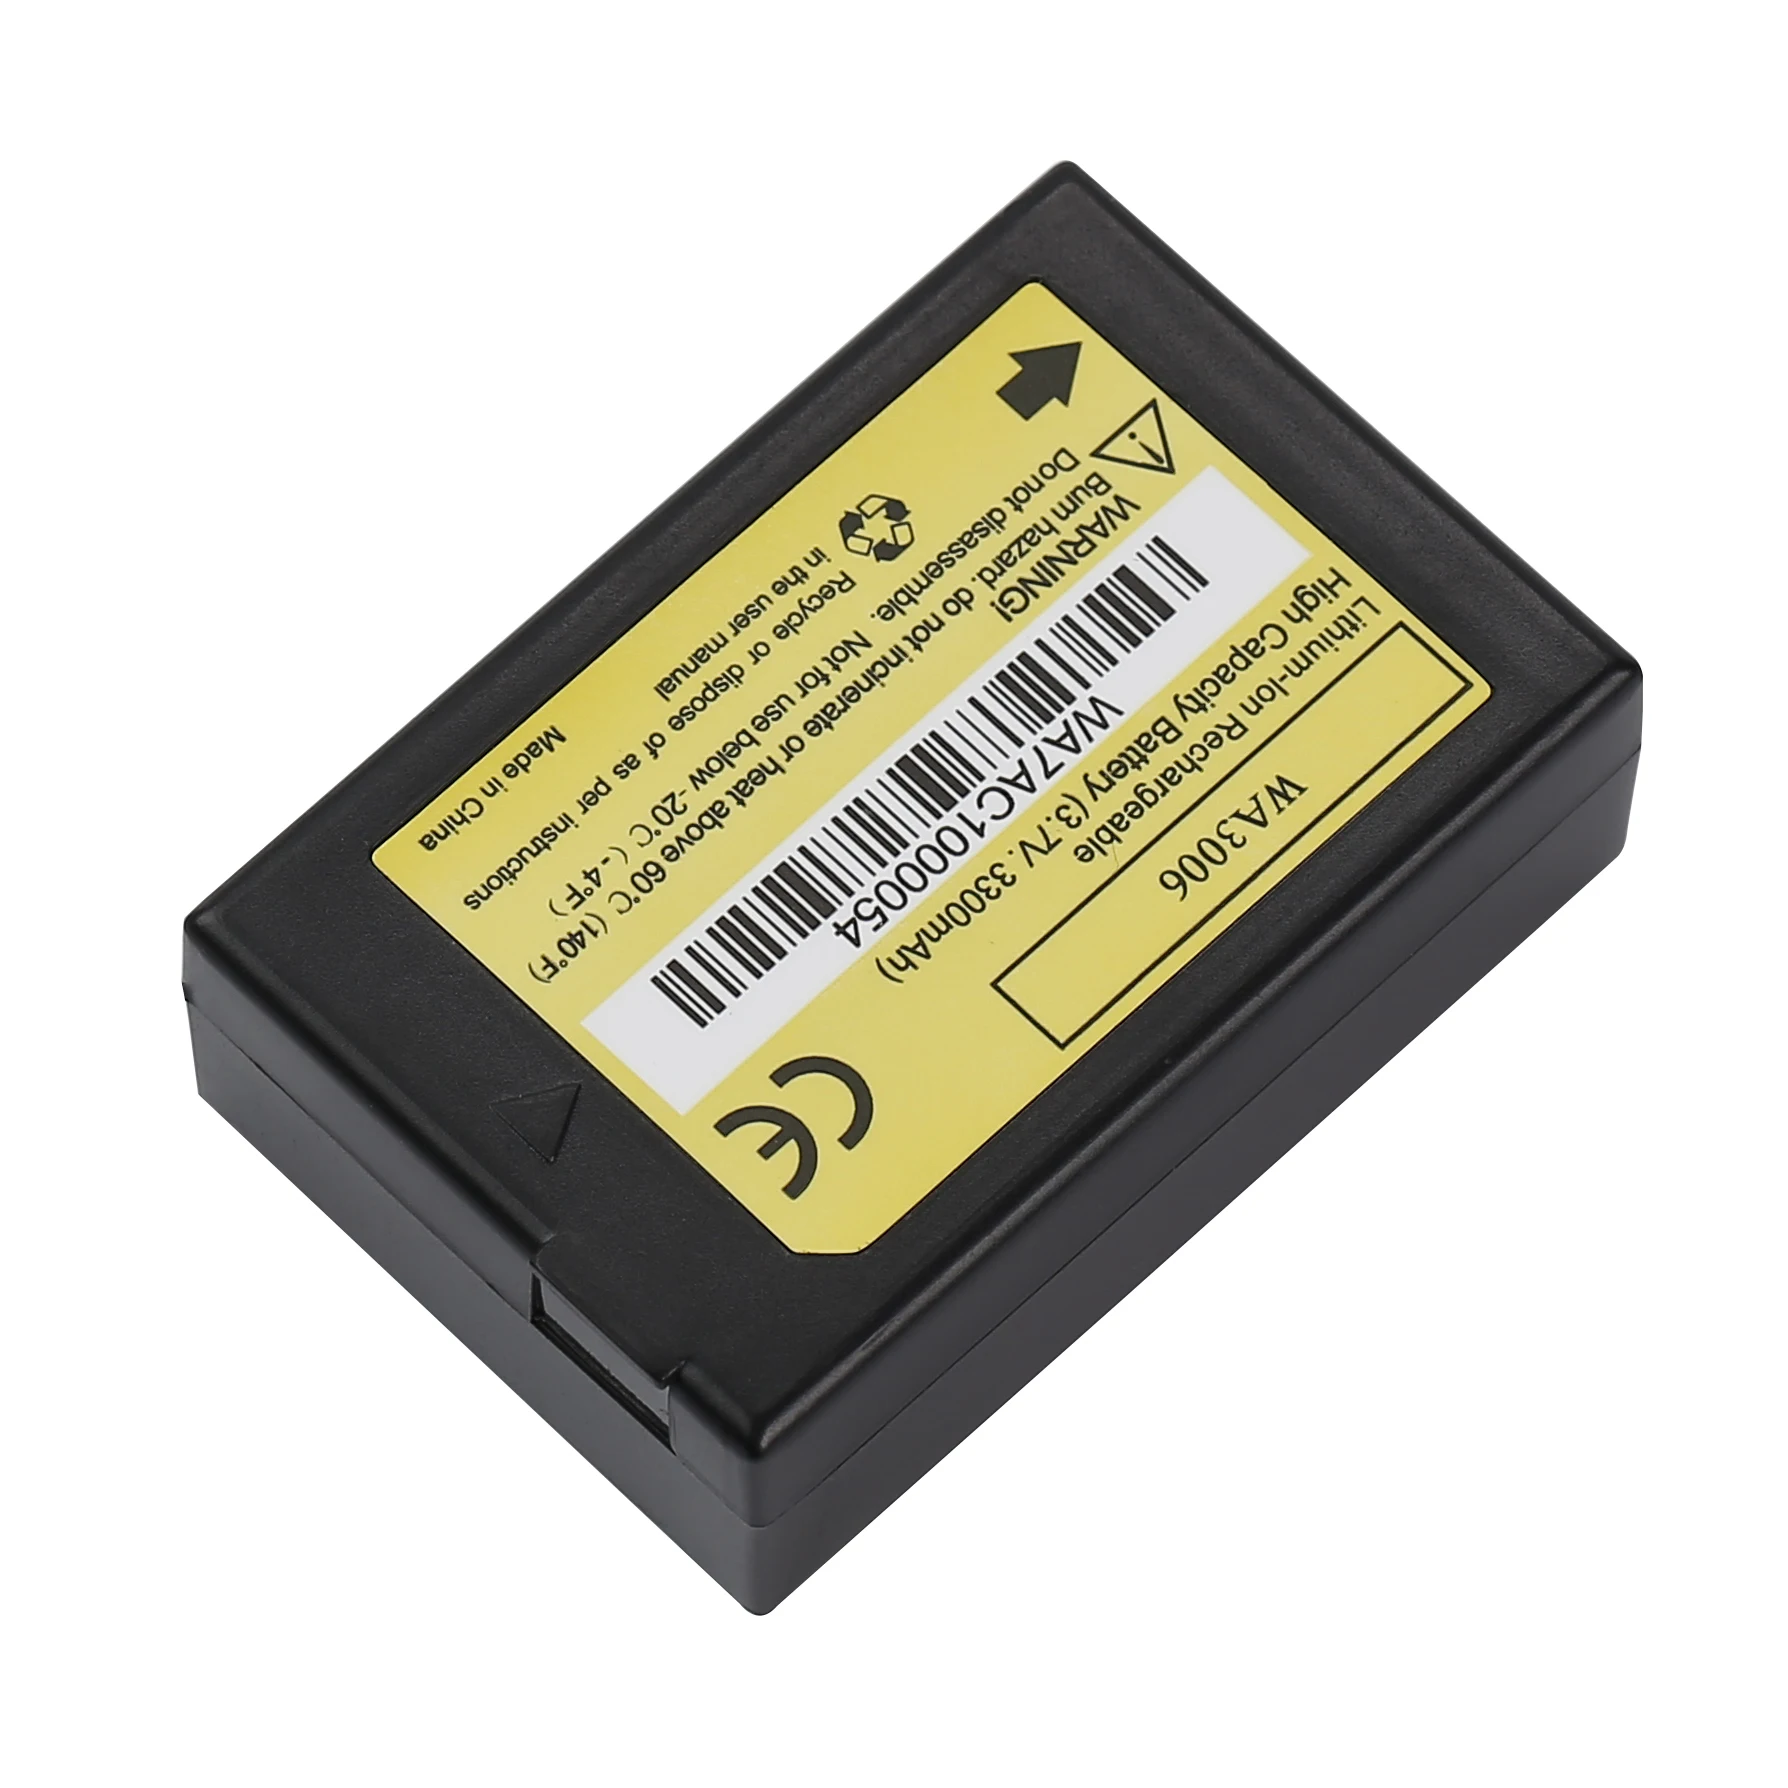 

High Quality South WA3006 RTK Battery For SOUTH GPS RTK, PSION 7527C,7527,7525C